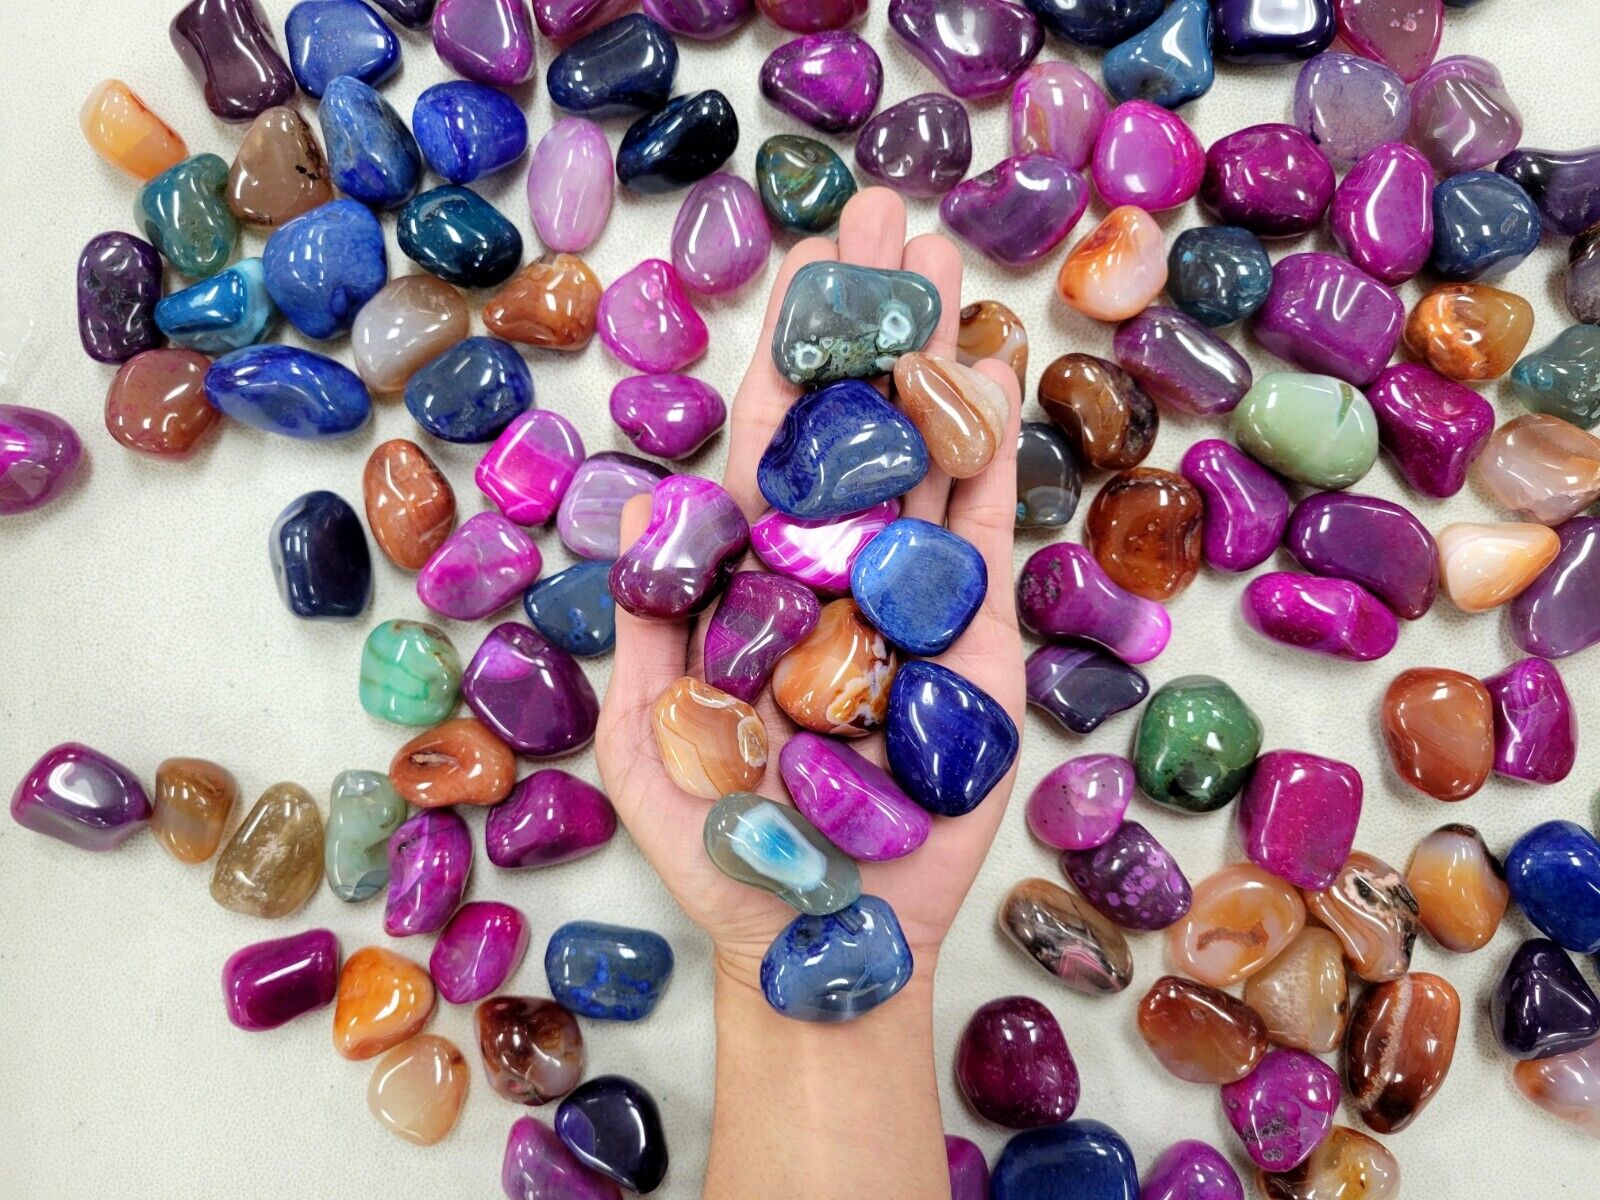 Shiny Polished Agate Crystals Tumbled Stones Dyed Natural Rocks Wholesale